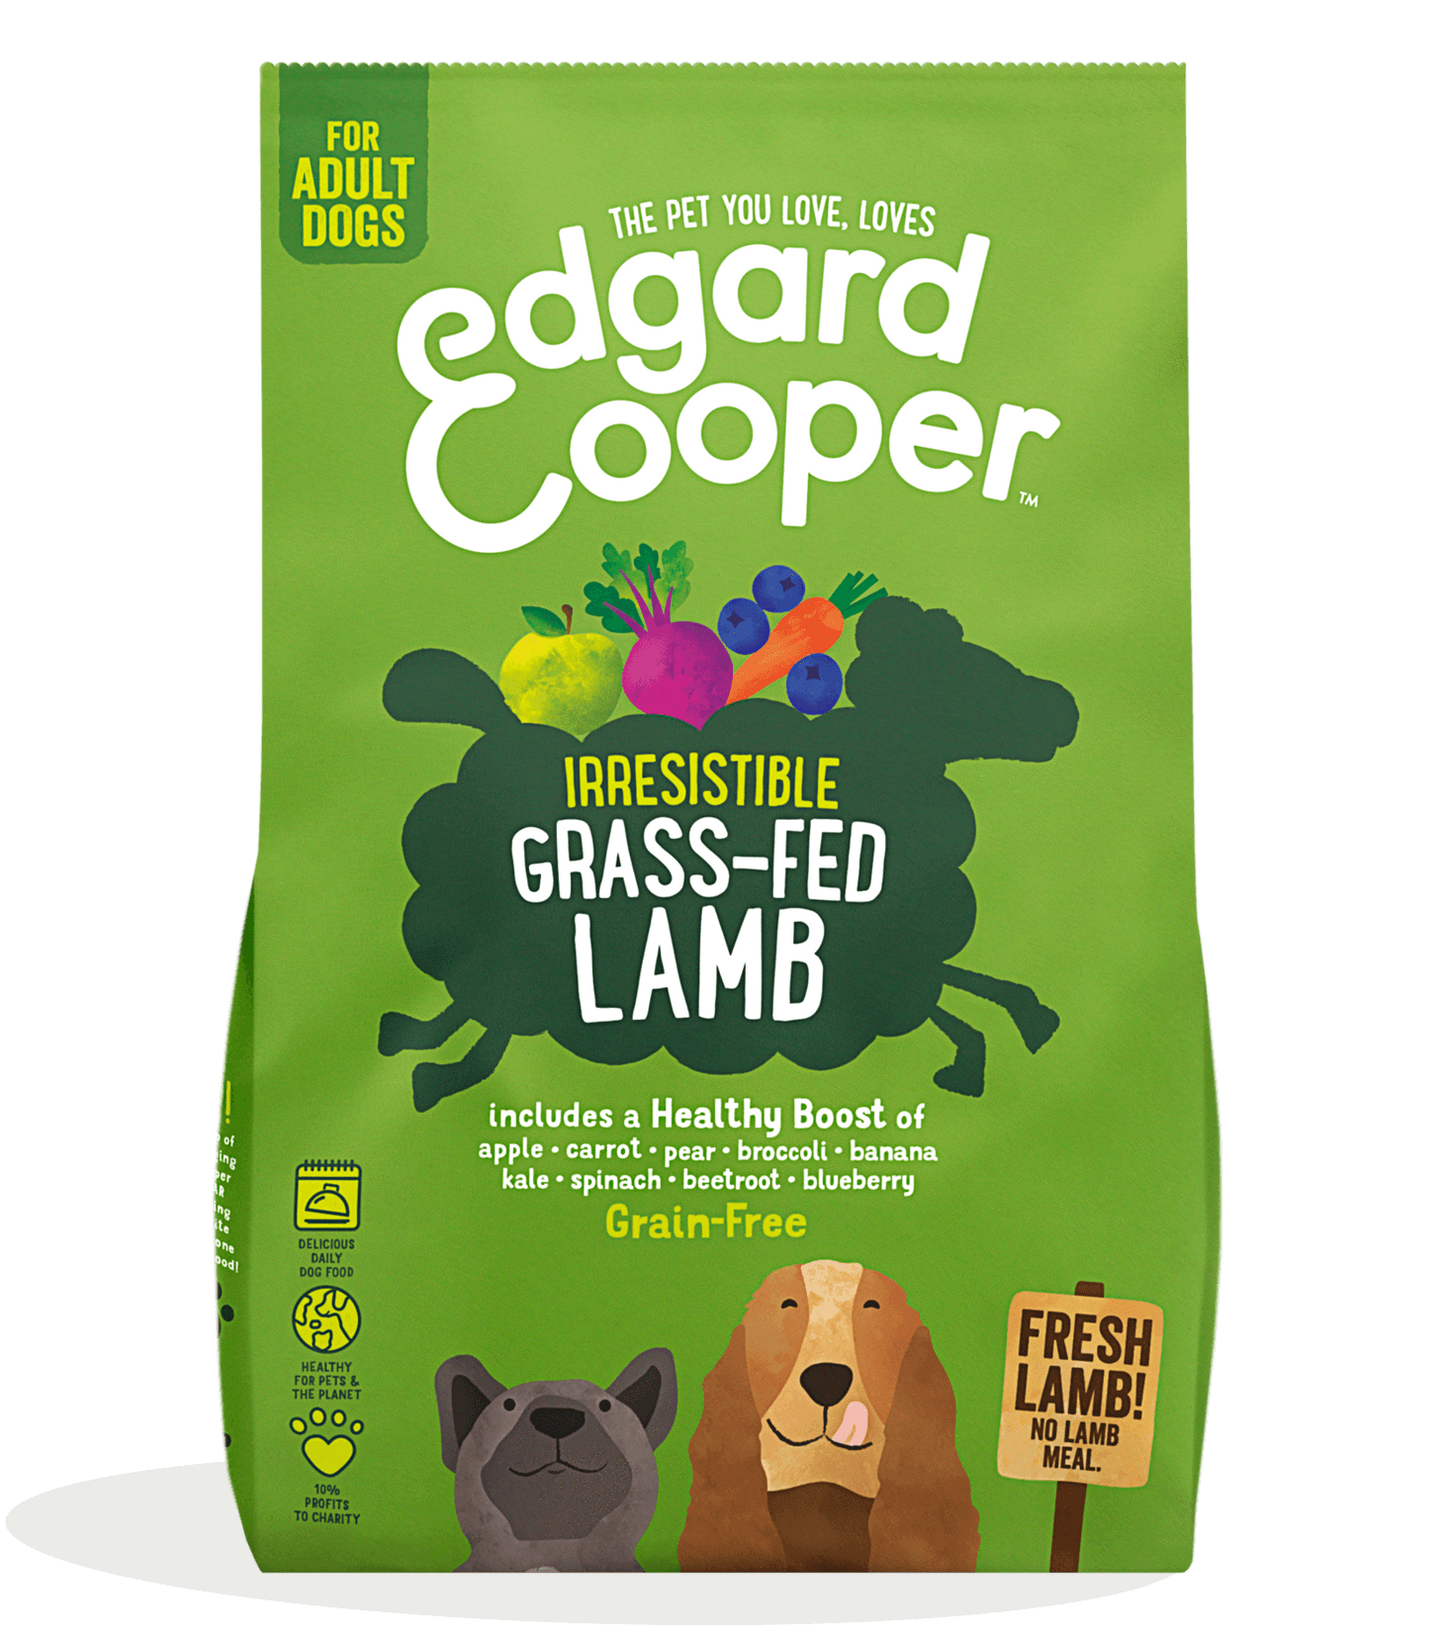 Edgard Cooper Fresh Grass-Fed Lamb